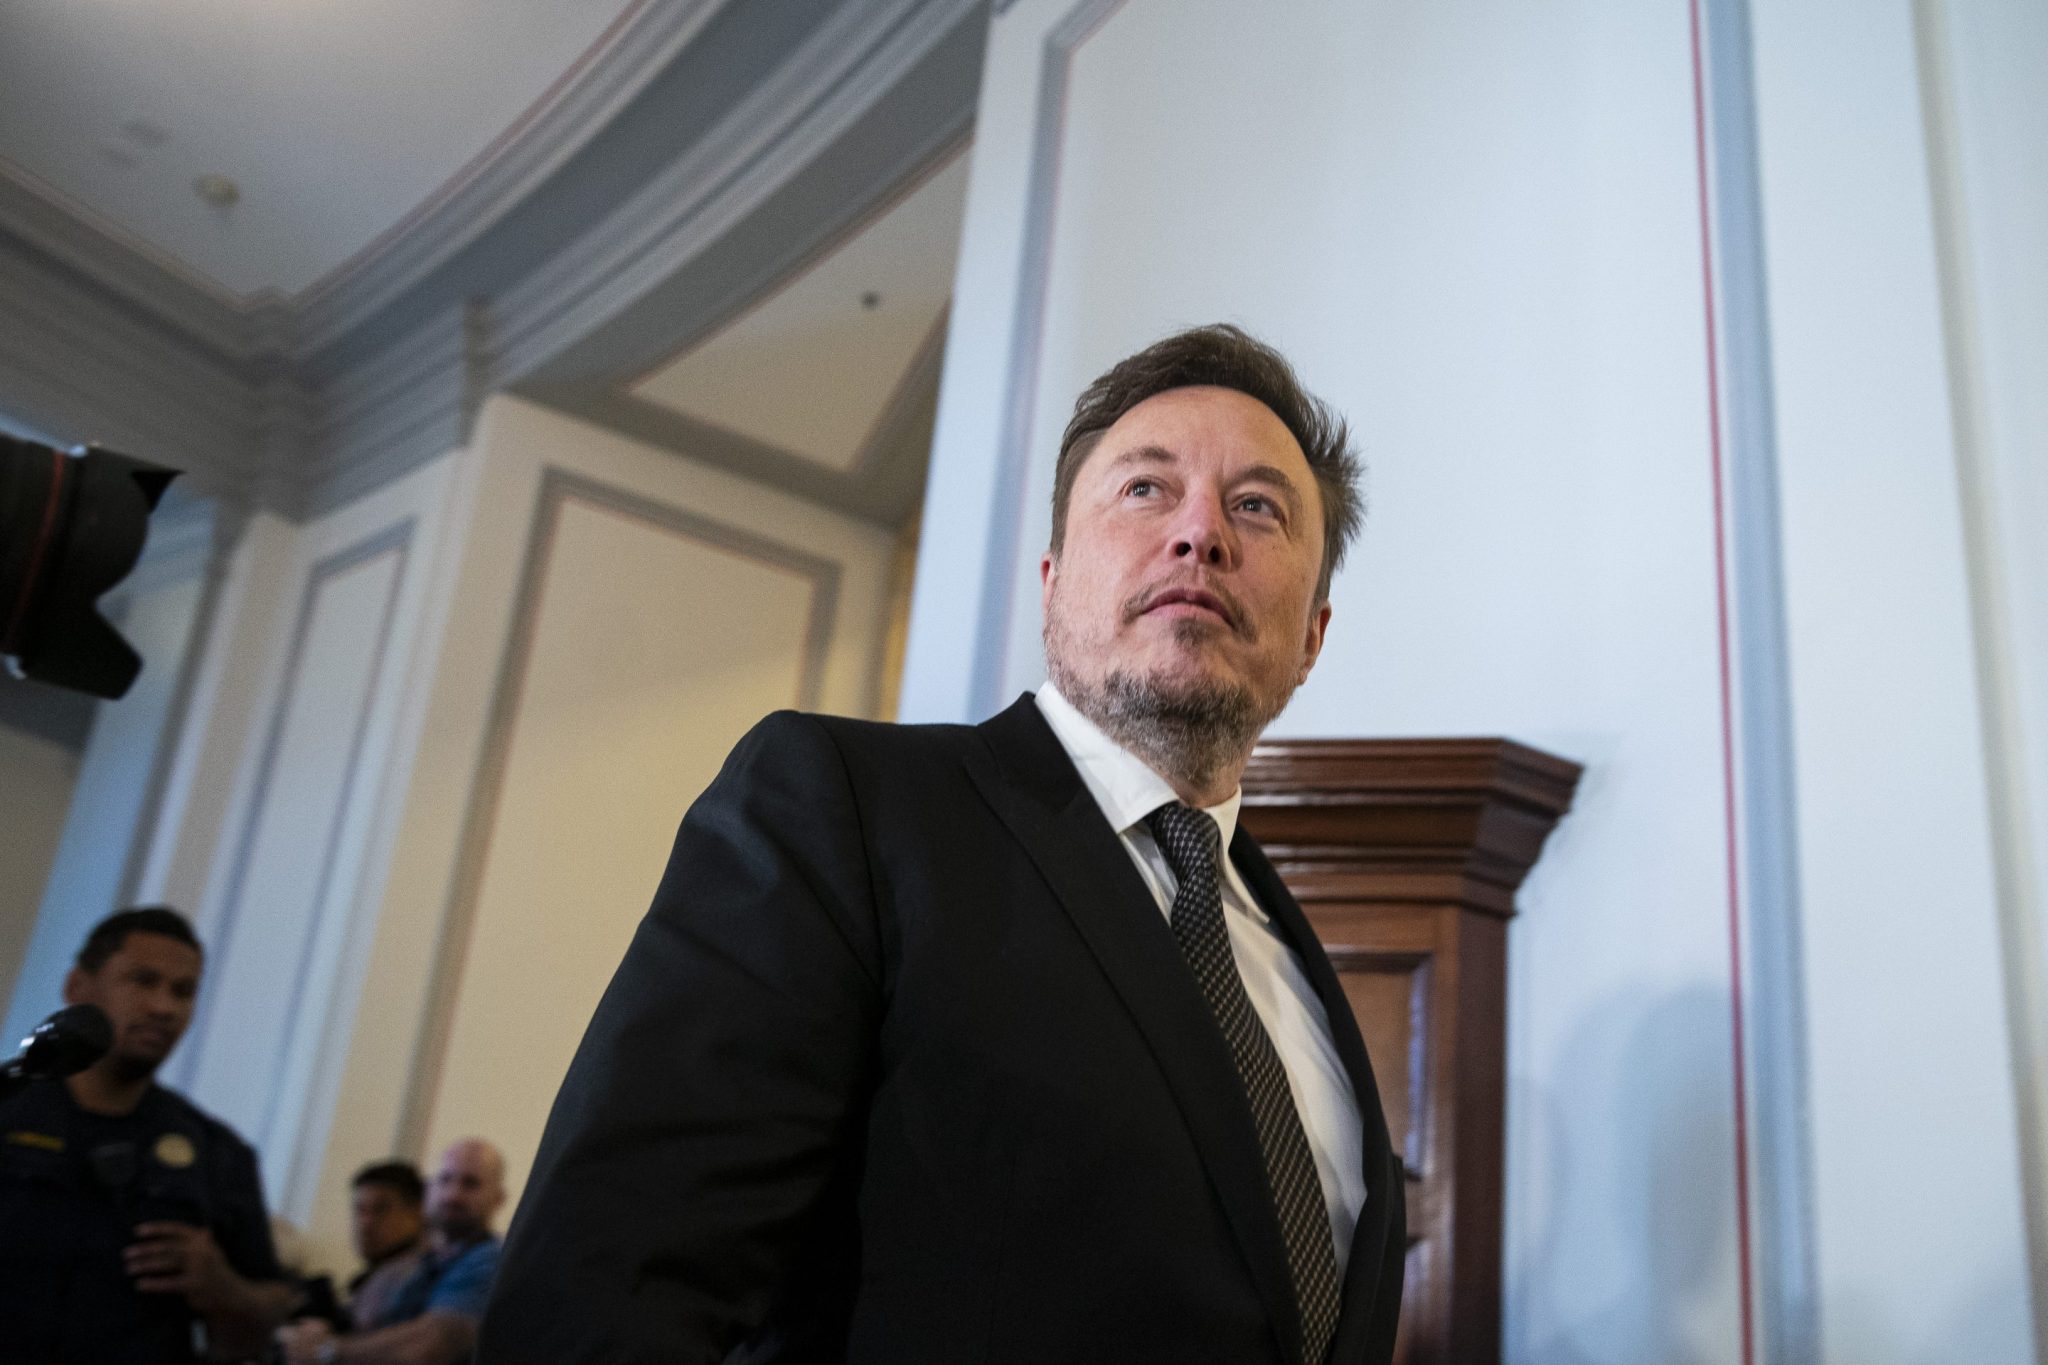 Elon Musk’s Starlink service denial in Ukraine war operation prompts Senate scrutiny over his ‘outsized role’